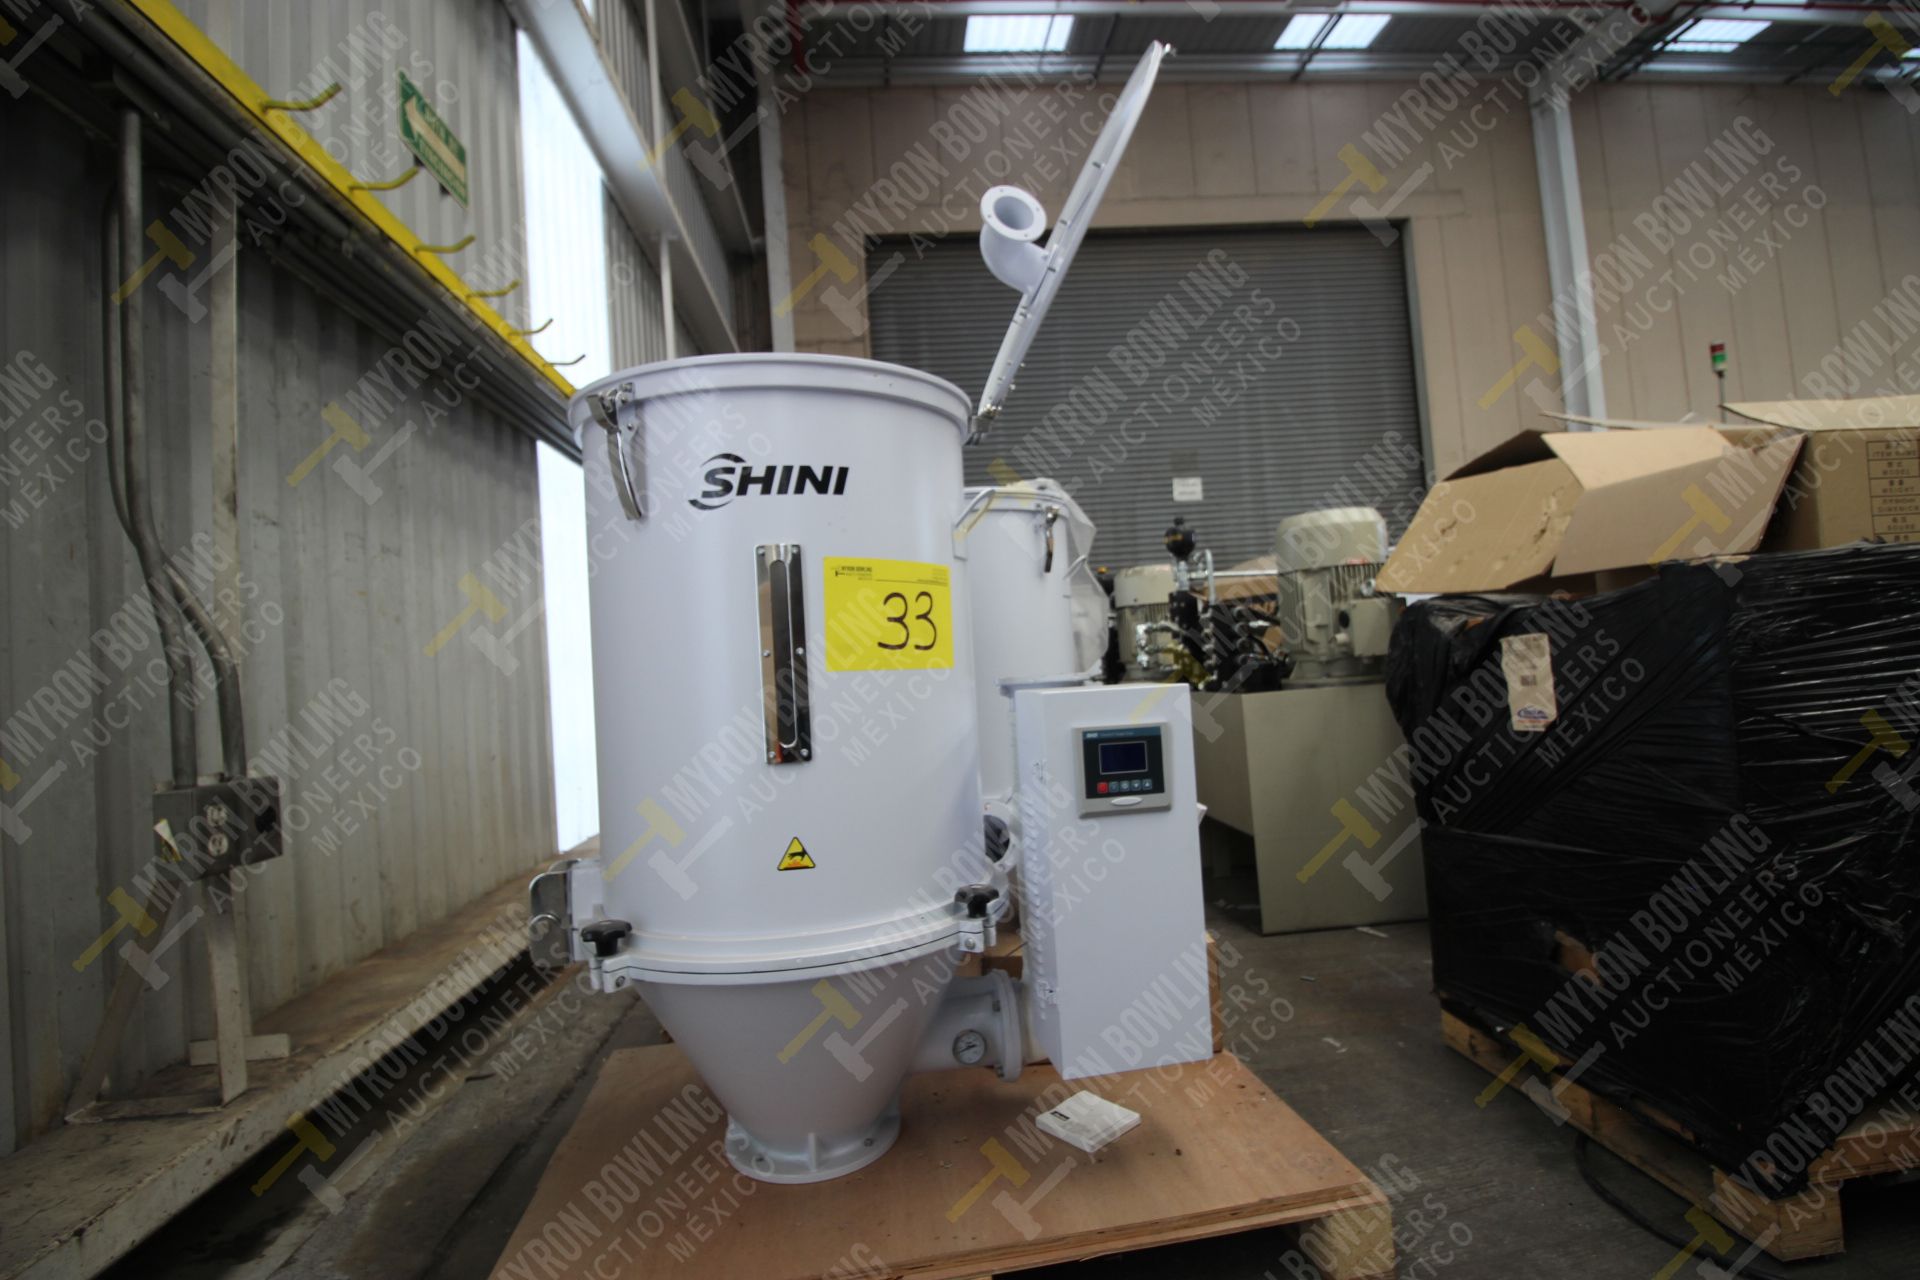 Shini Plastics Technologies 100kg. hopper dryer mod. SHD-100SL-CE, serial number 2HD16100381 - Image 13 of 13